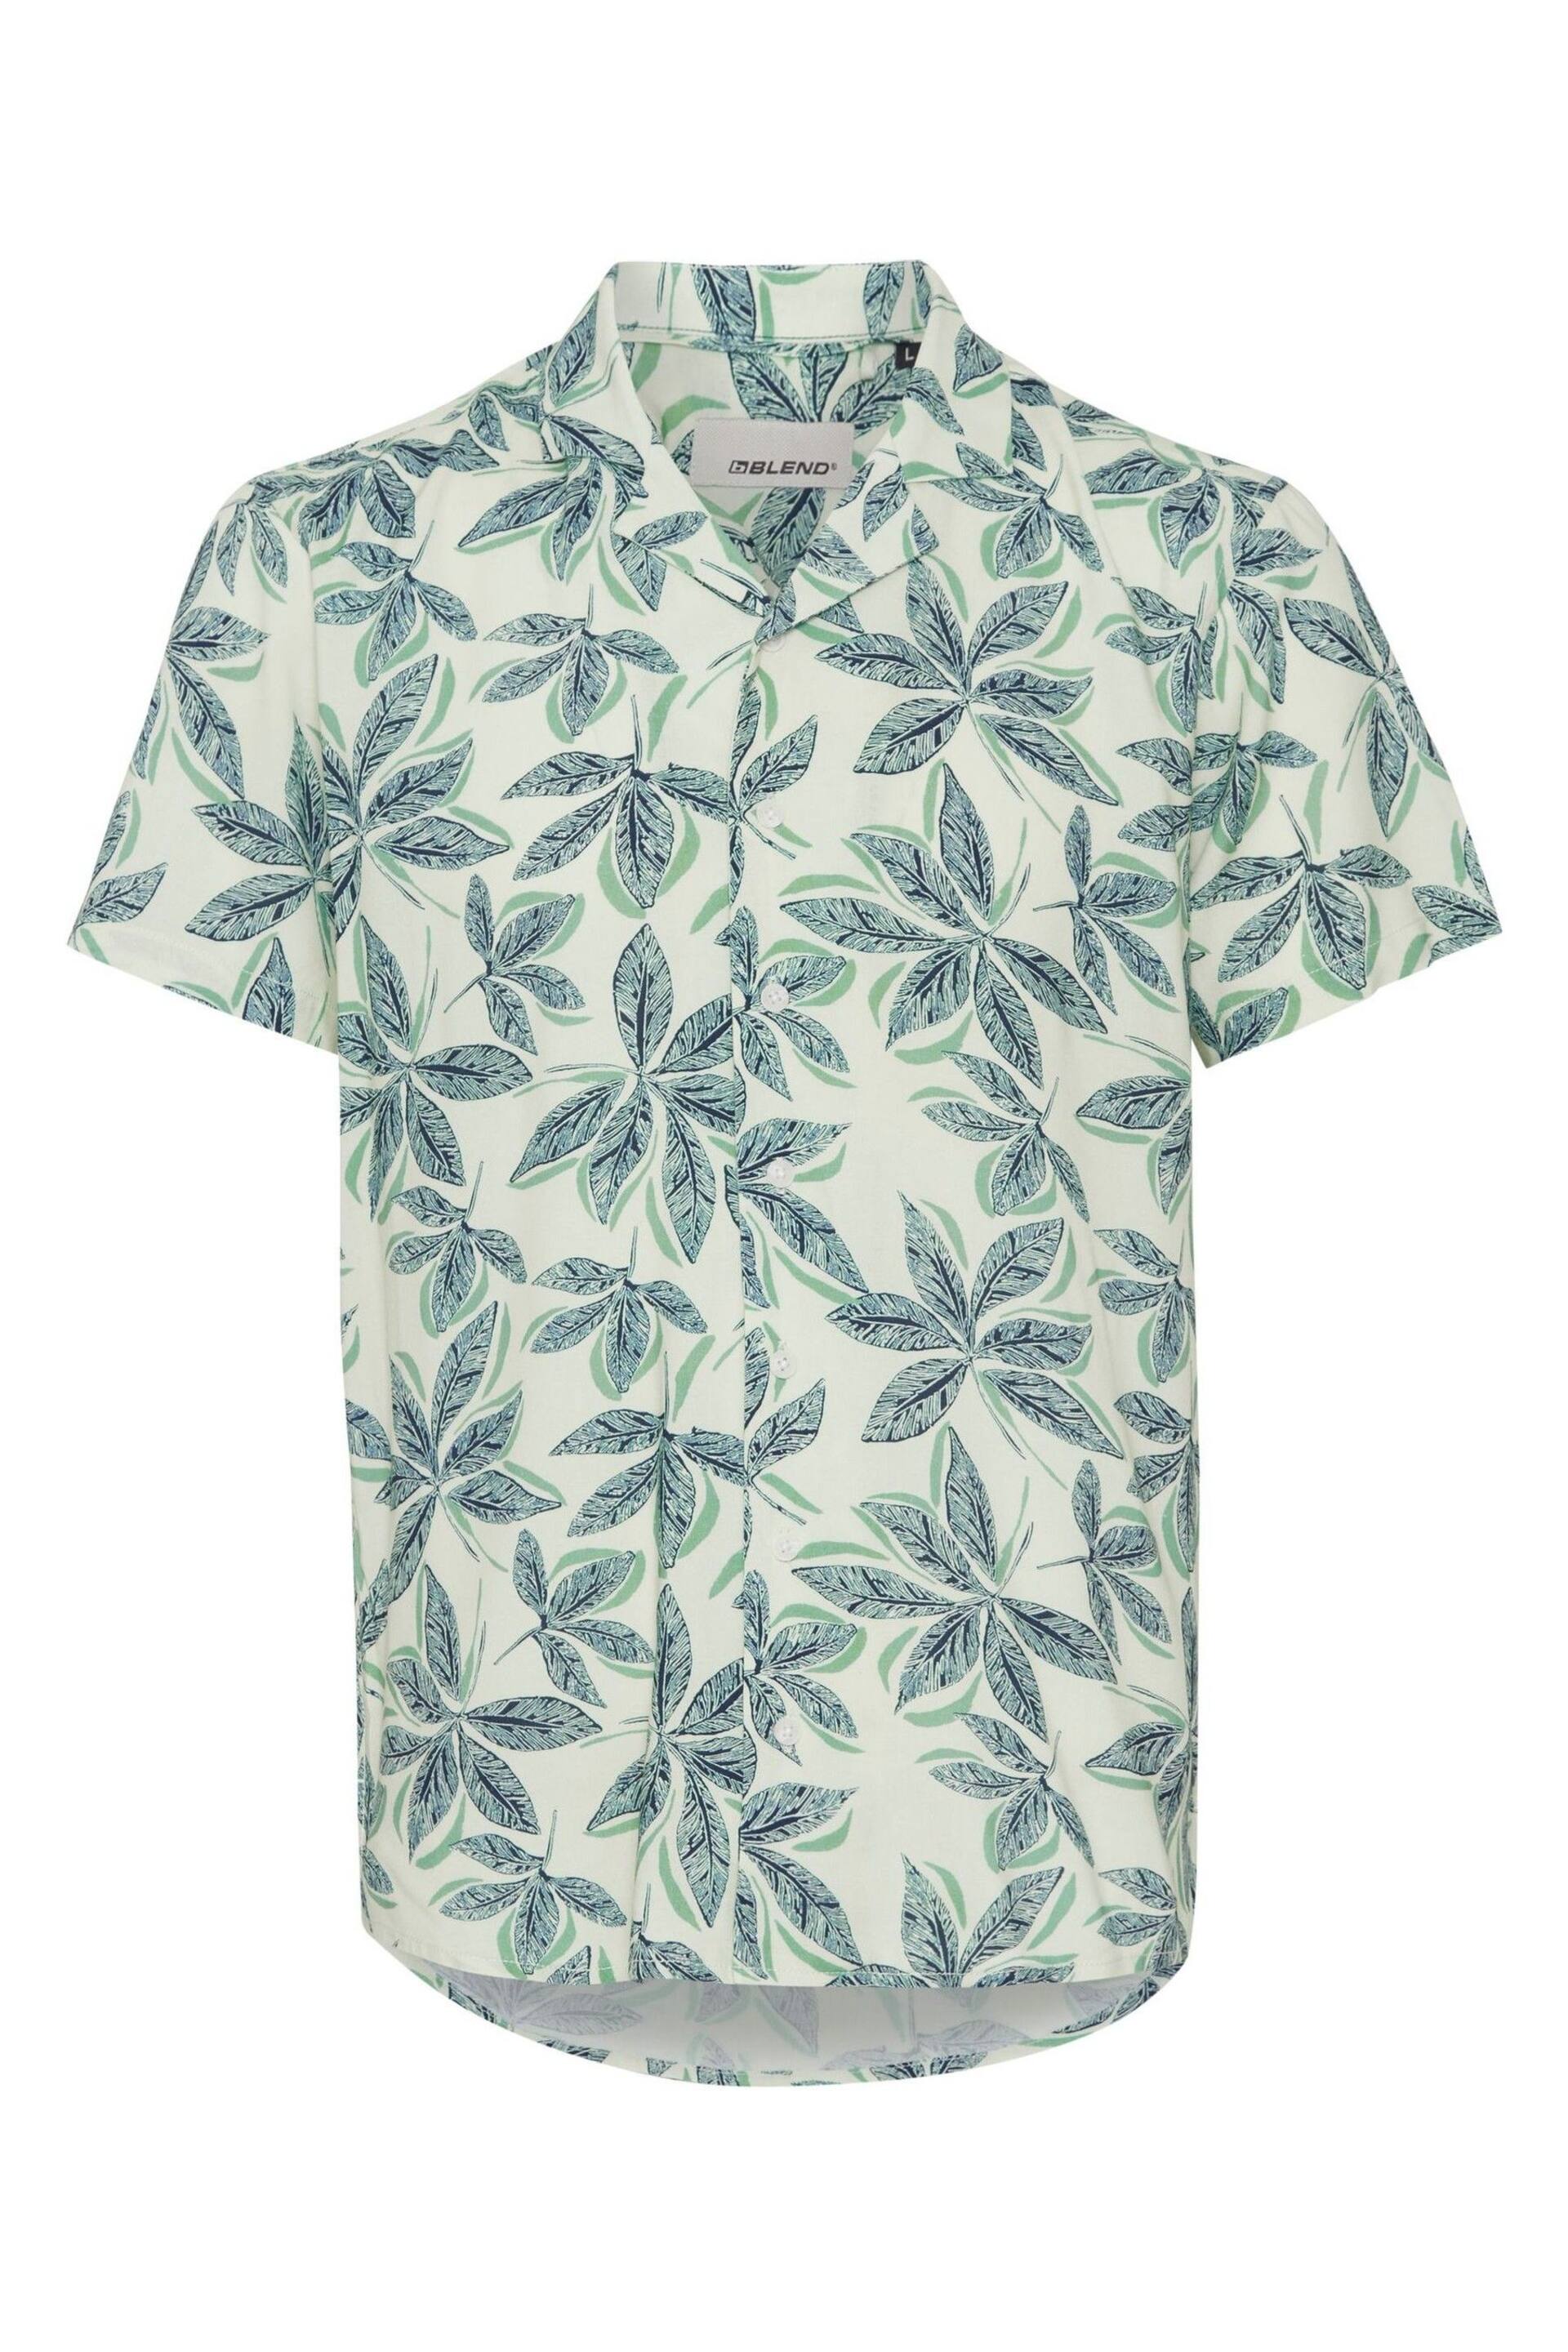 Blend White Leaf Print Short Sleeve Shirt - Image 5 of 5